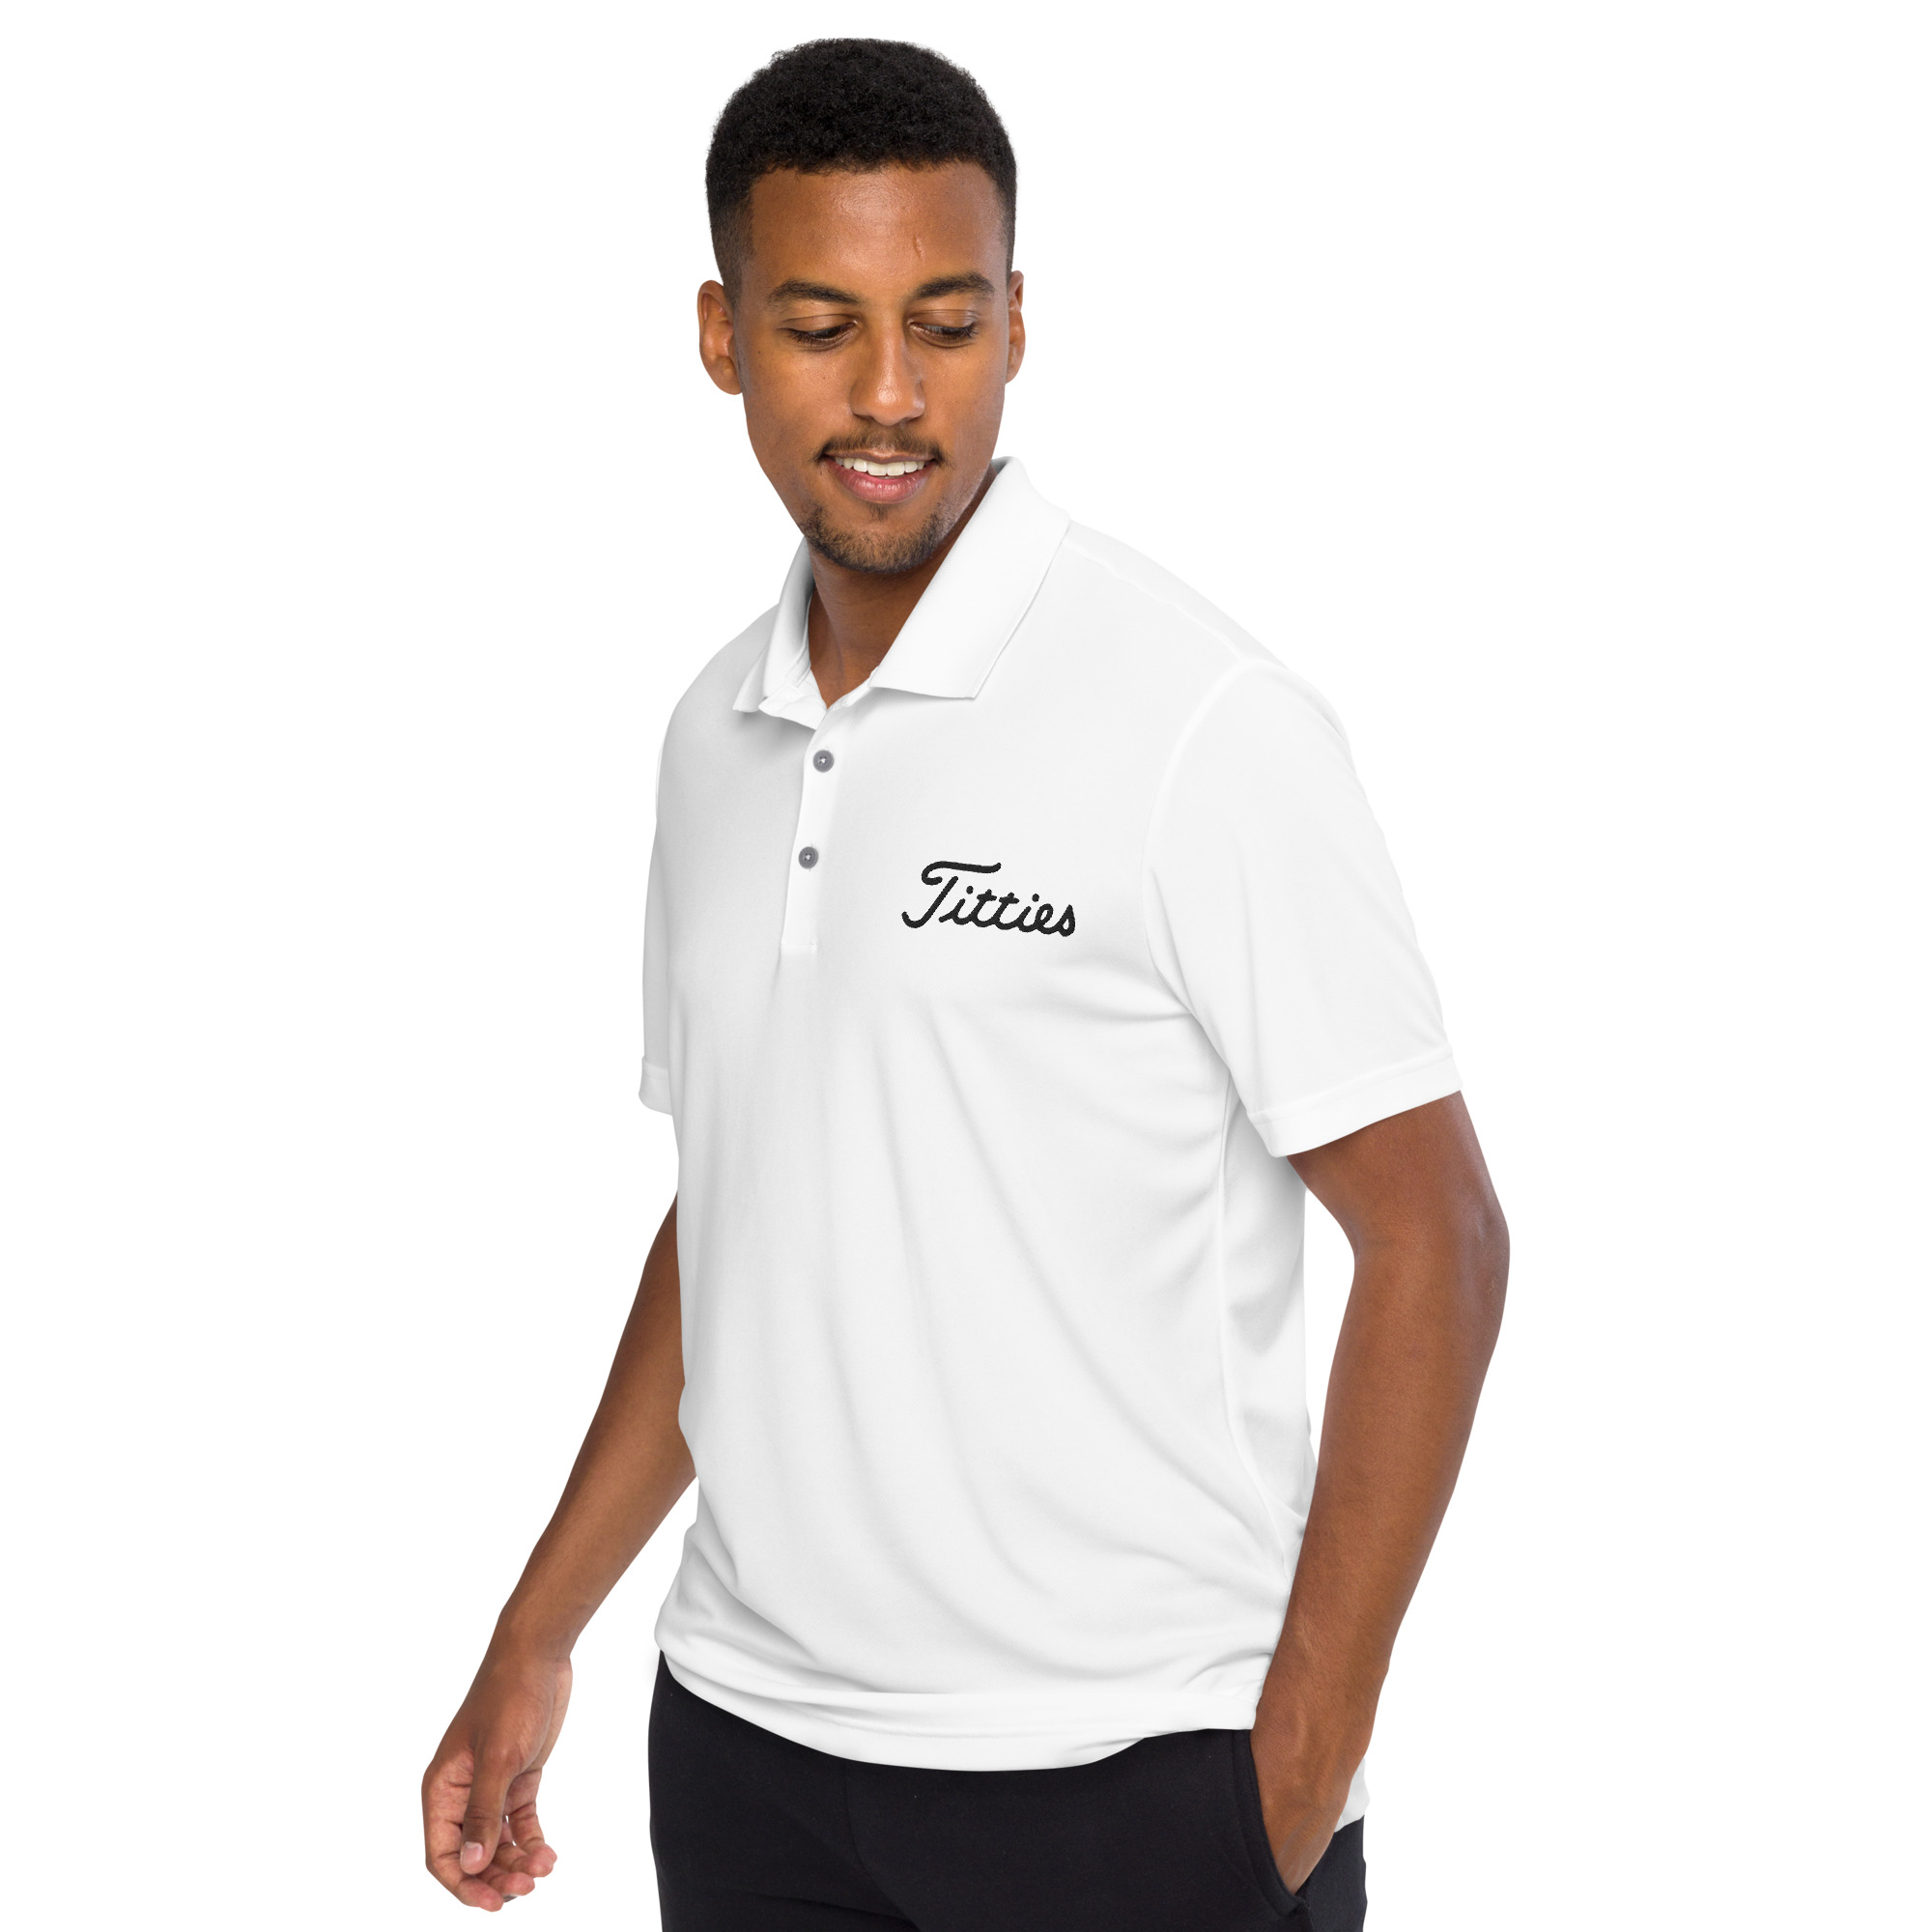 Adidas - Titties Polo Golfing Enthusiasts Performance Shirt